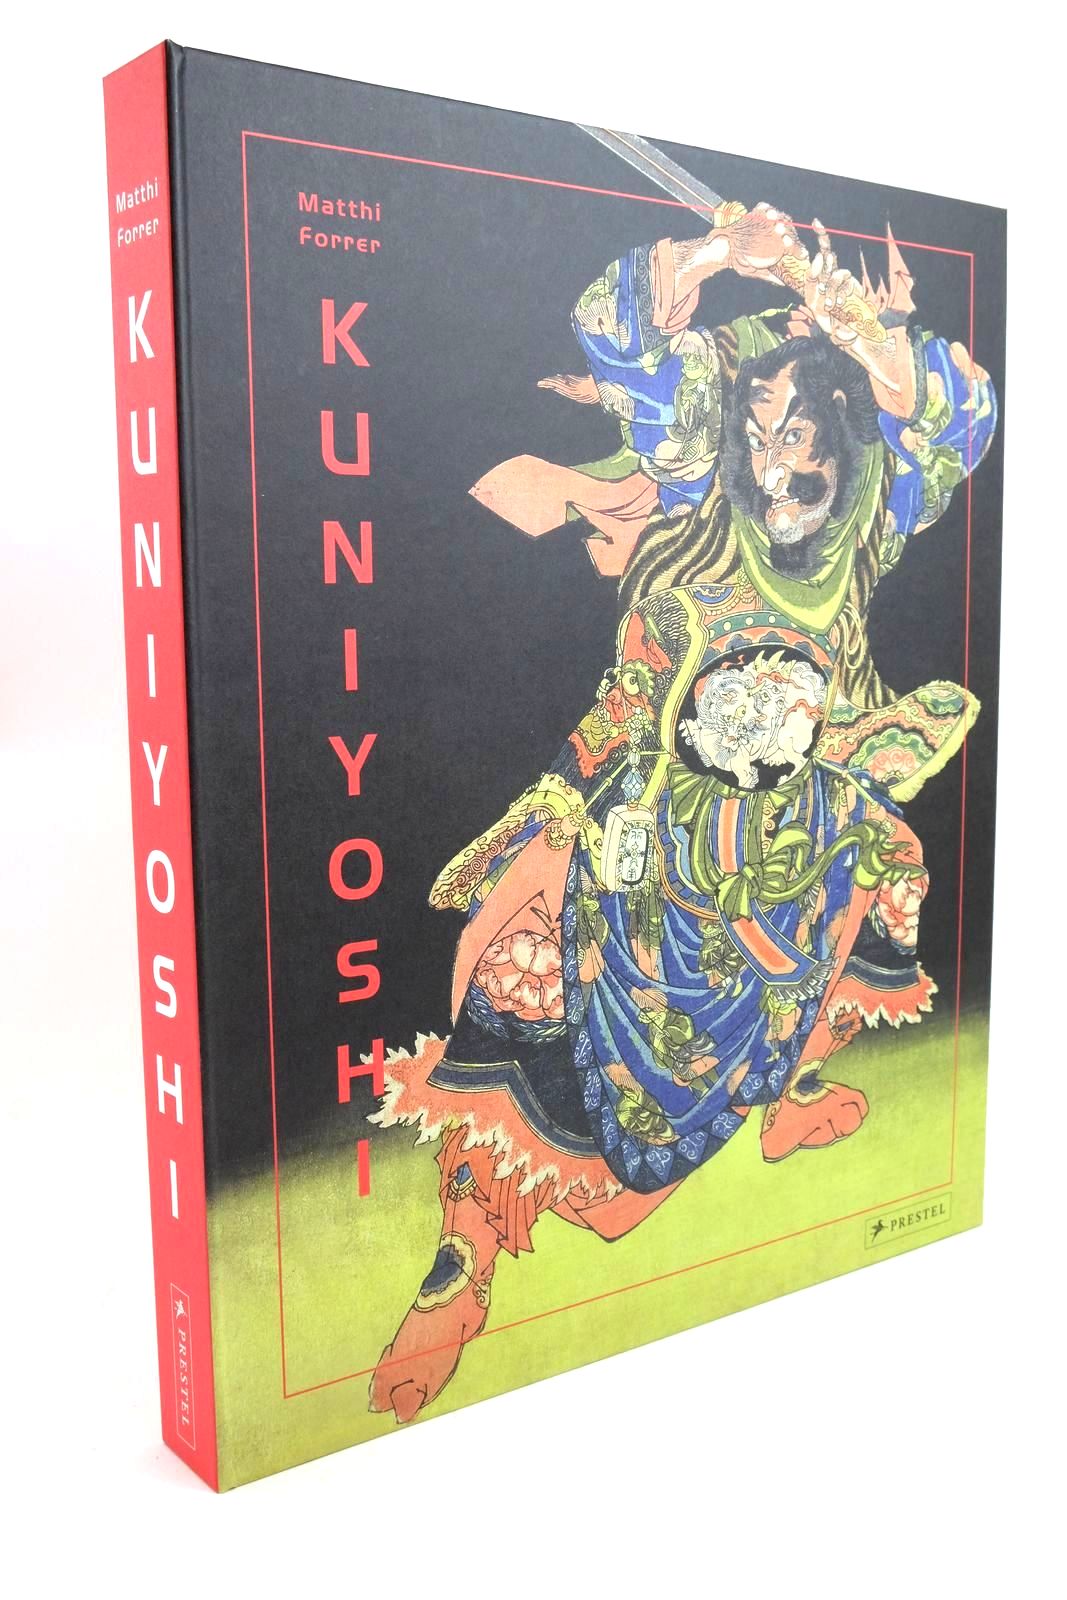 Photo of KUNIYOSHI written by Forrer, Matthi illustrated by Kuniyoshi,  published by Prestel (STOCK CODE: 1321741)  for sale by Stella & Rose's Books